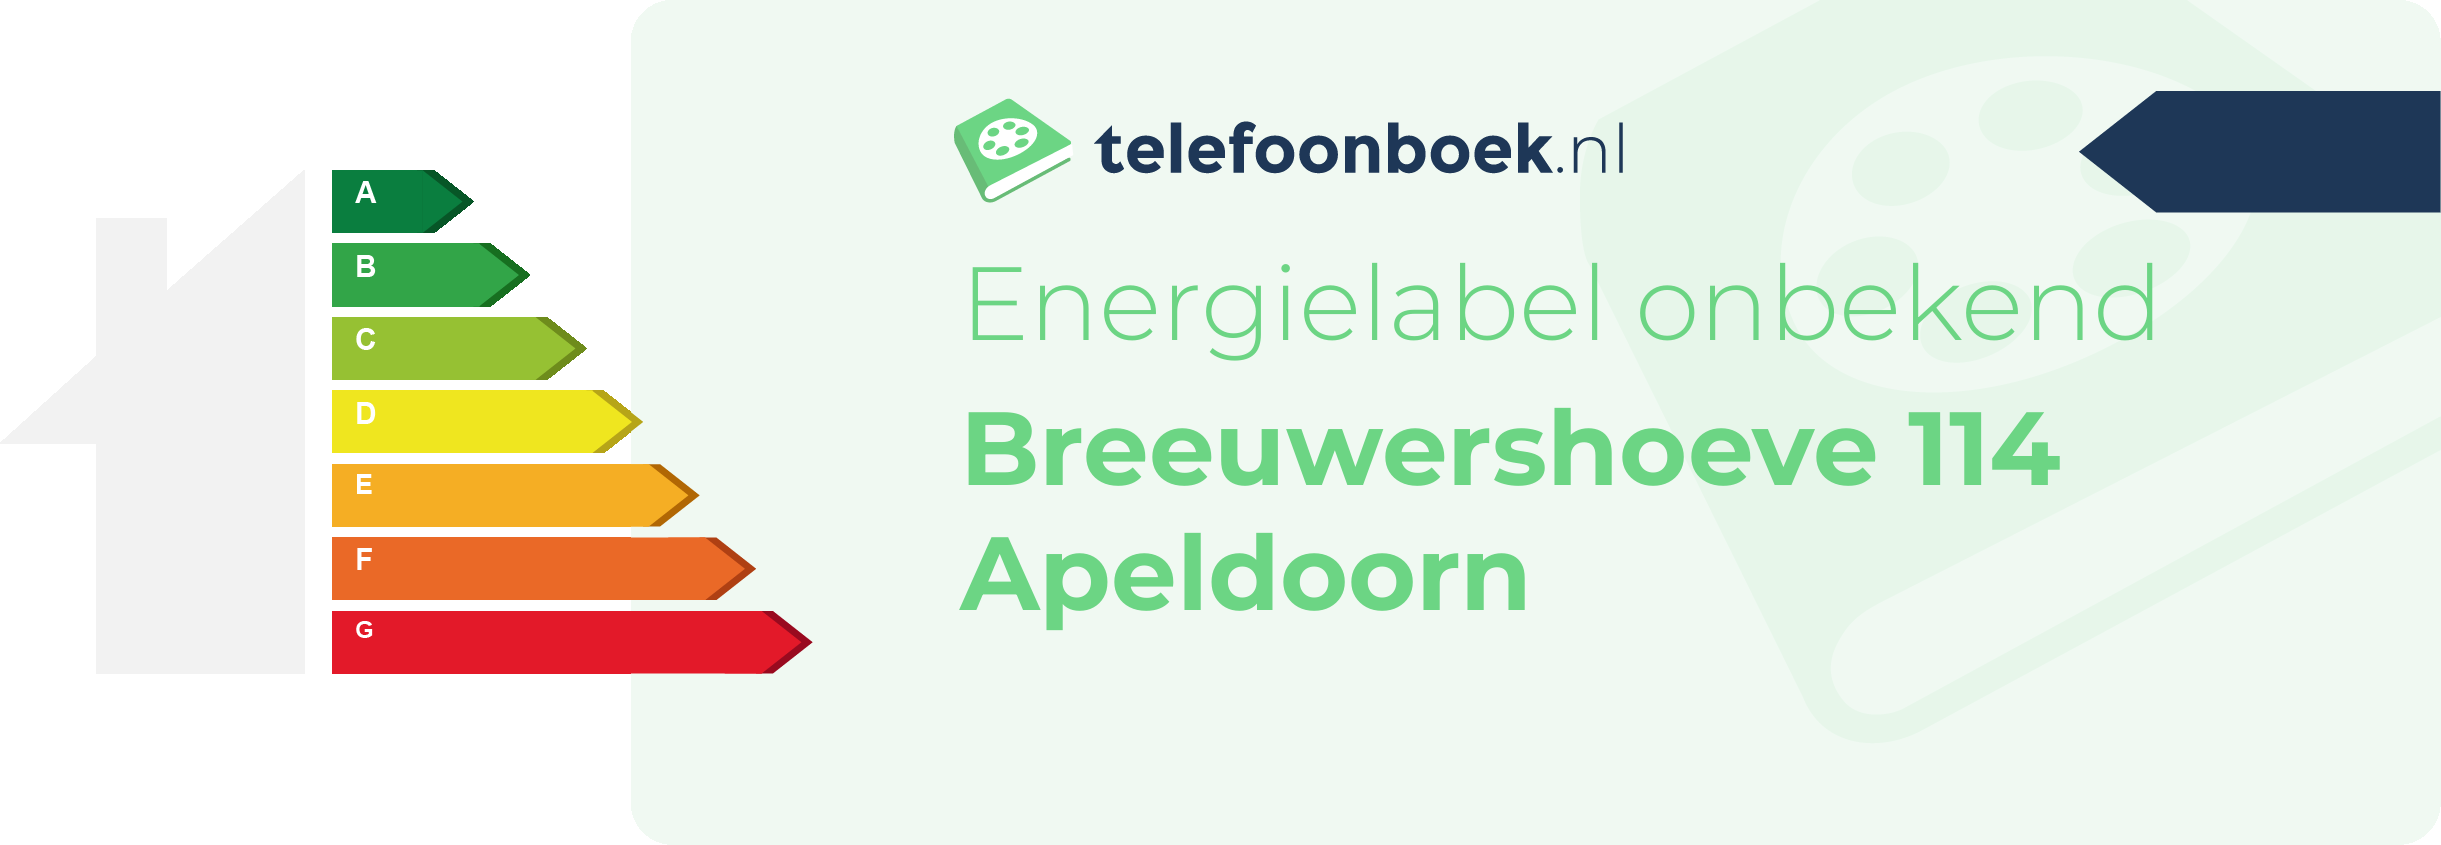 Energielabel Breeuwershoeve 114 Apeldoorn